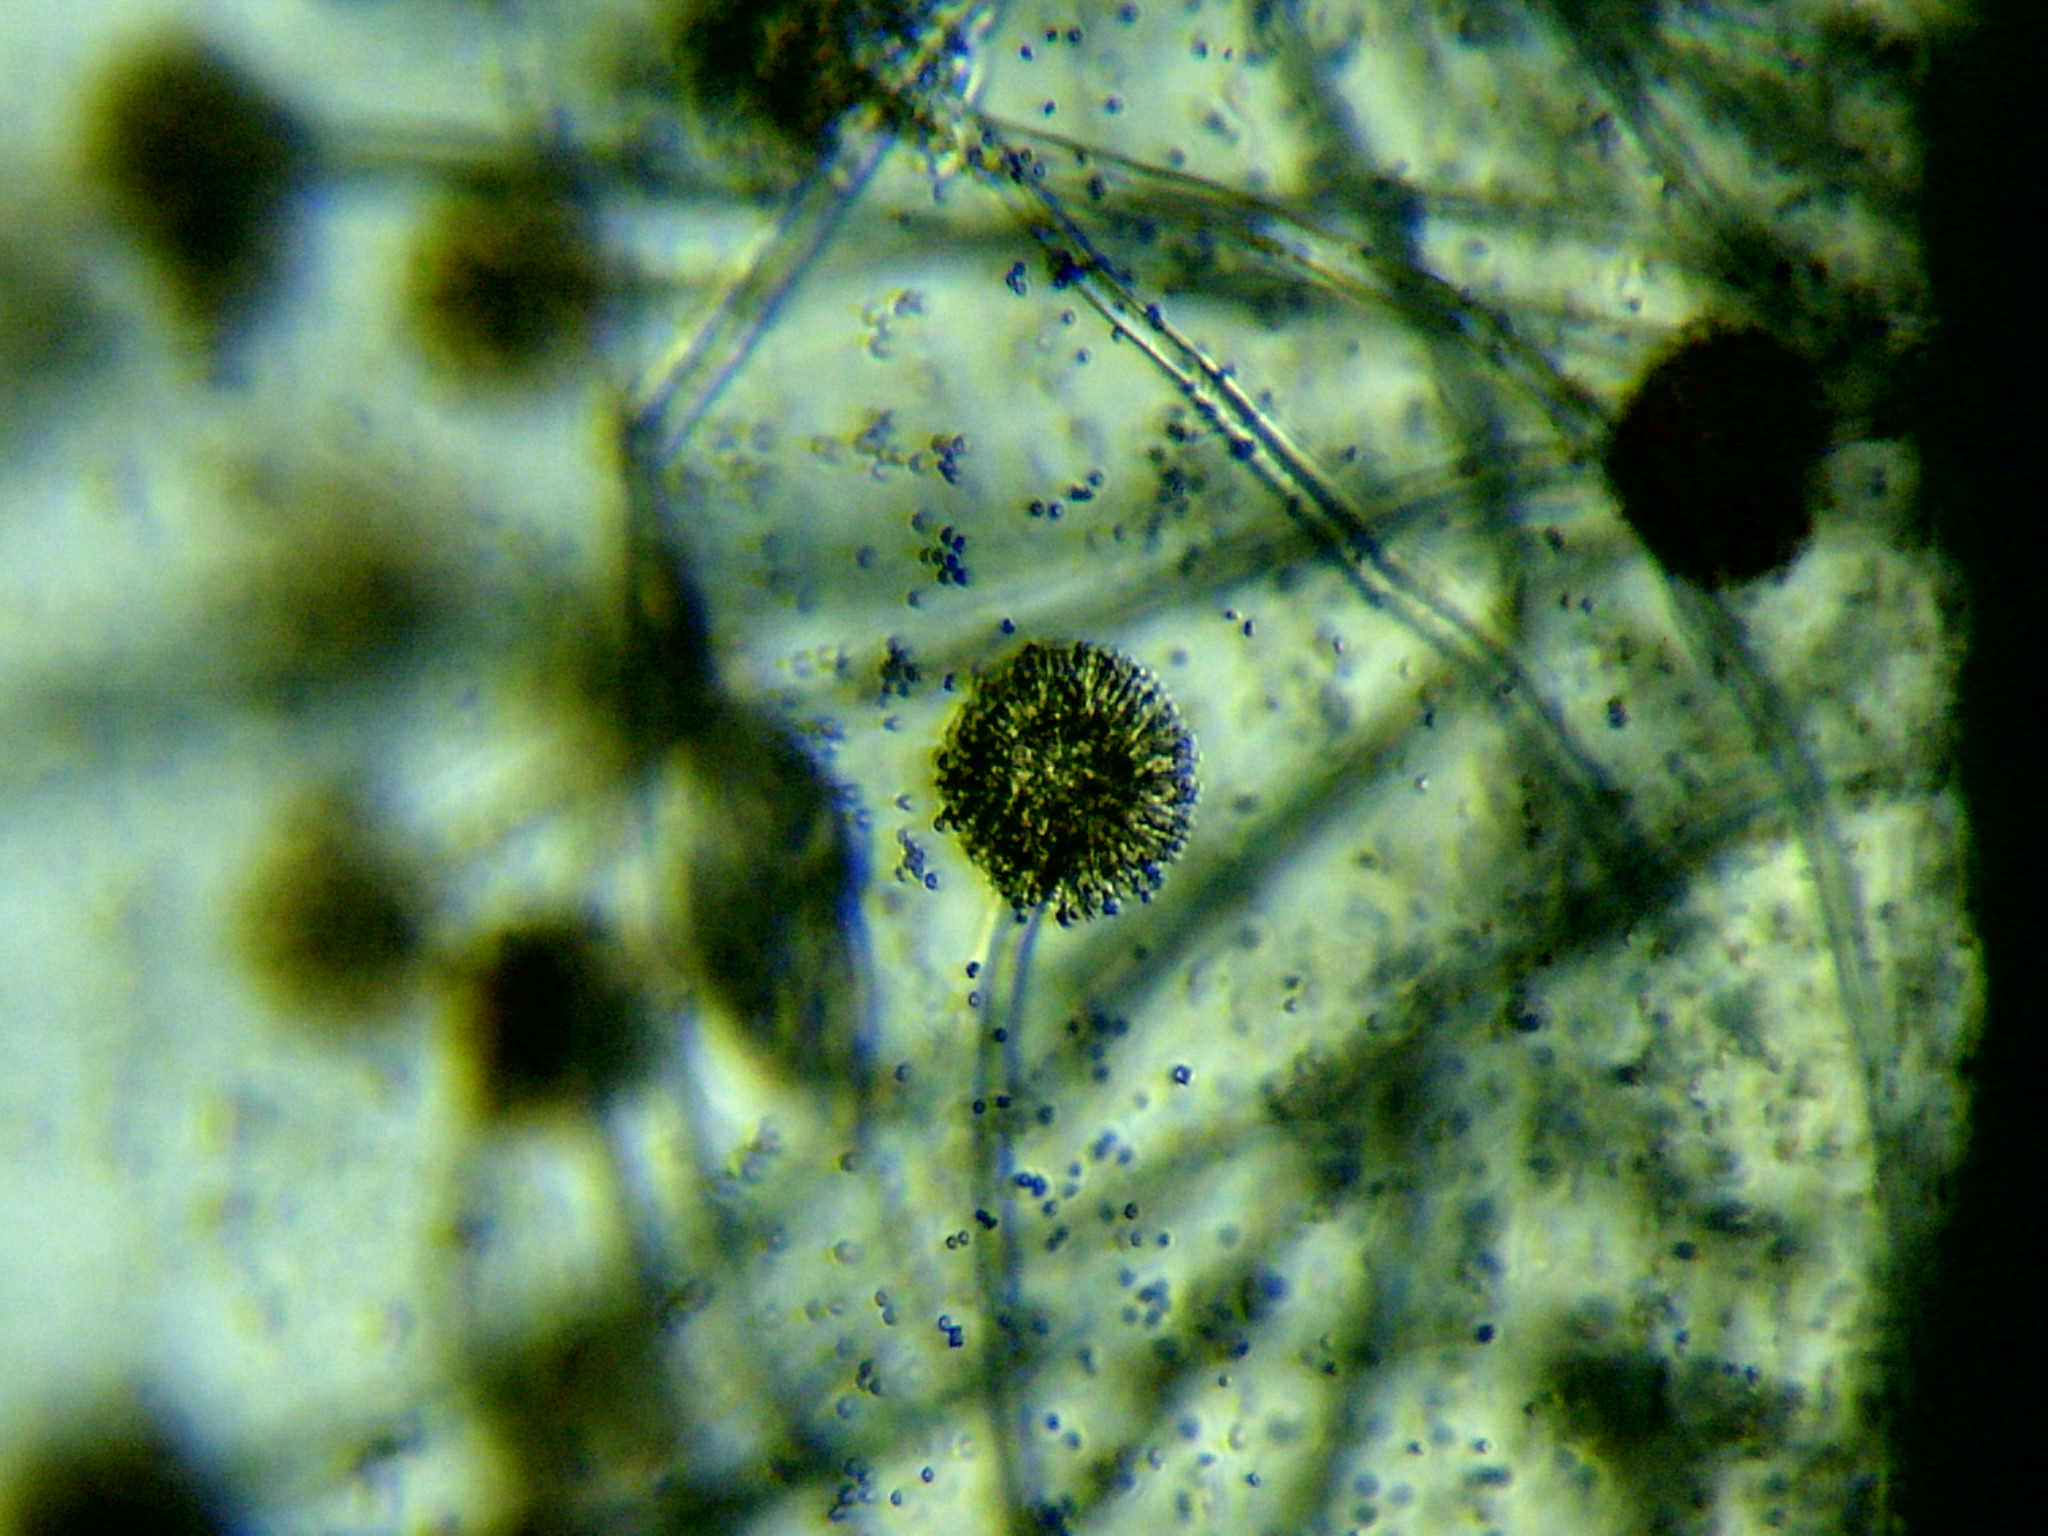 Rhizopus bread mold under microscope